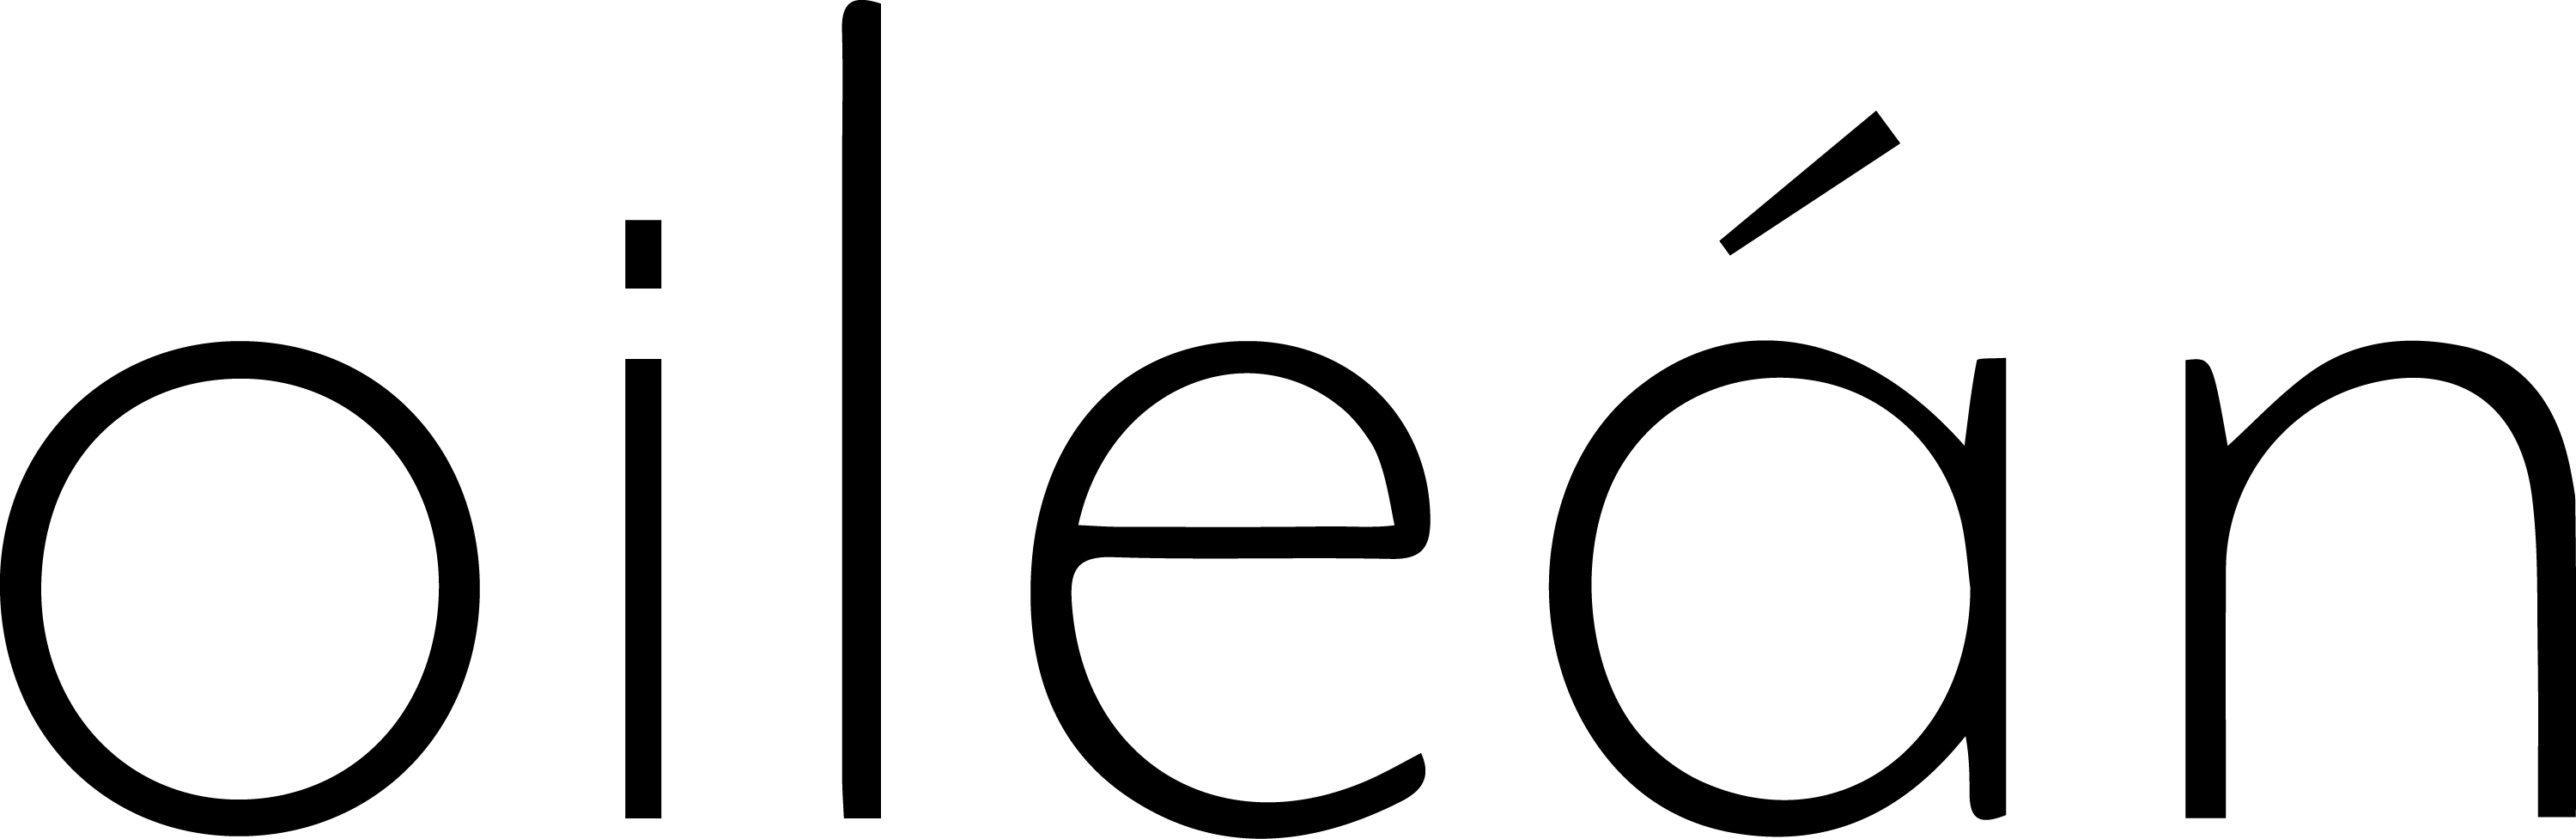 oilean black logo